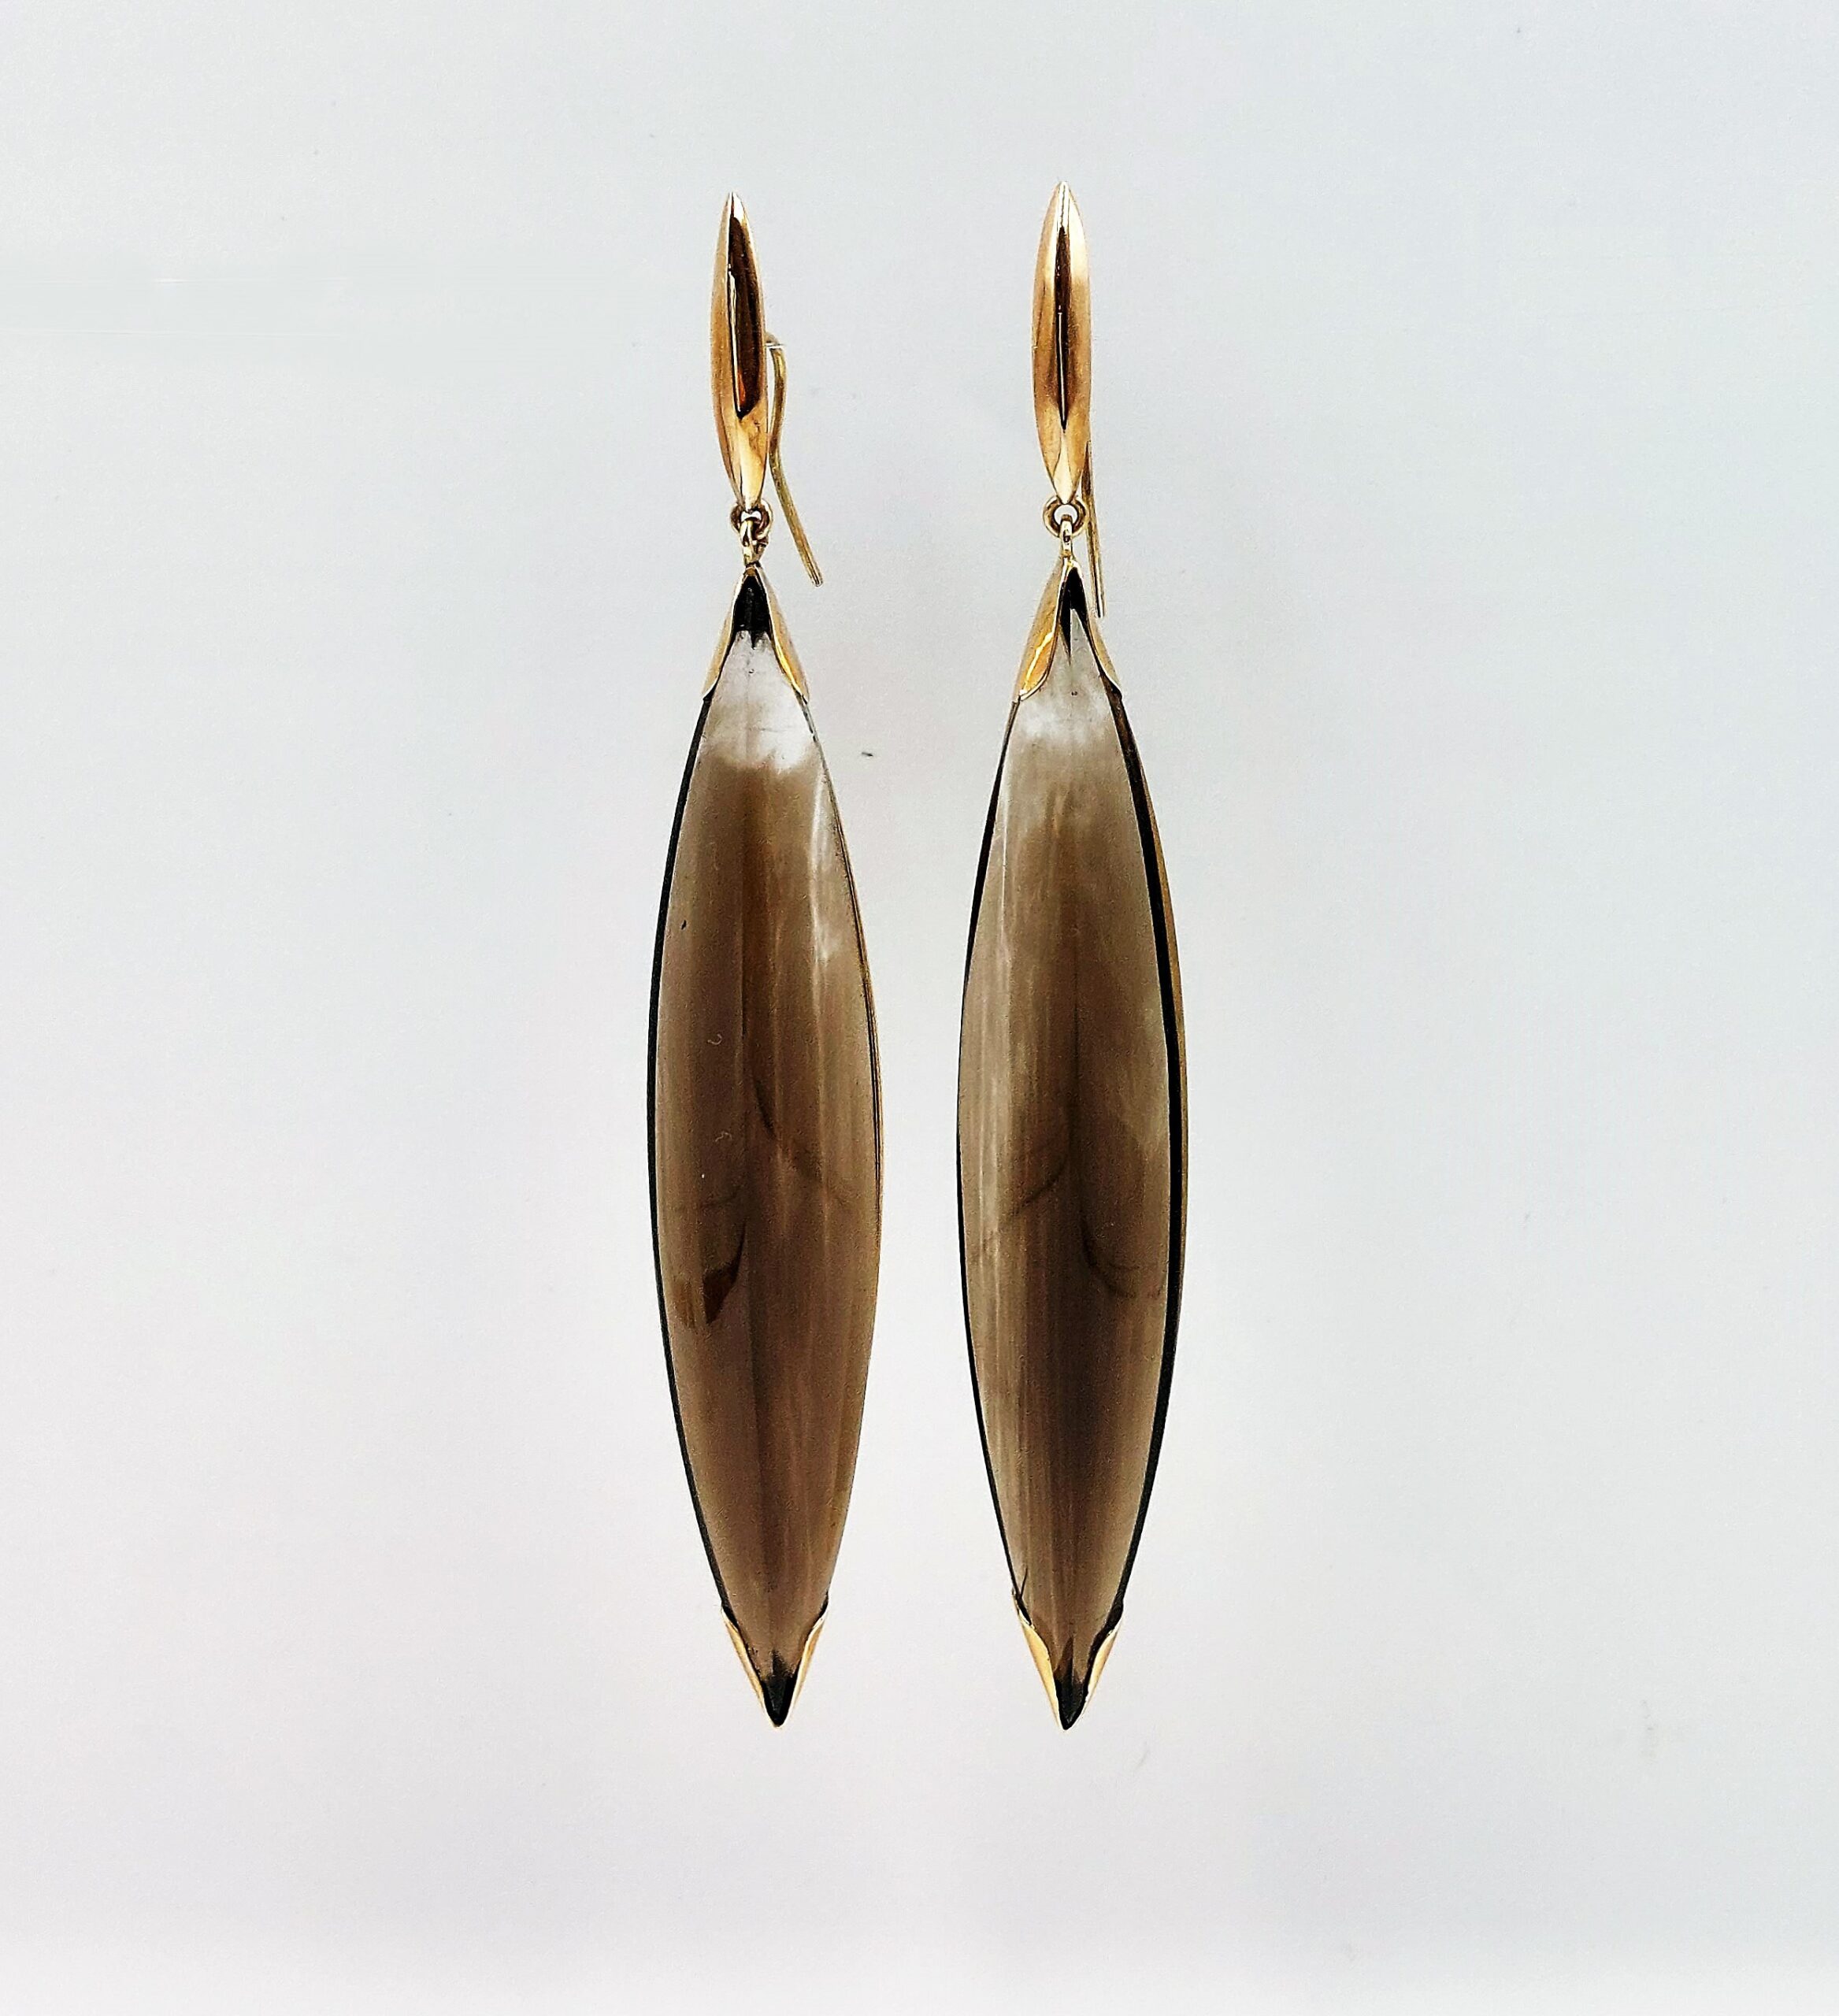 Smoky quartz and gold earrings | Earrings Collection | Drift Treasure